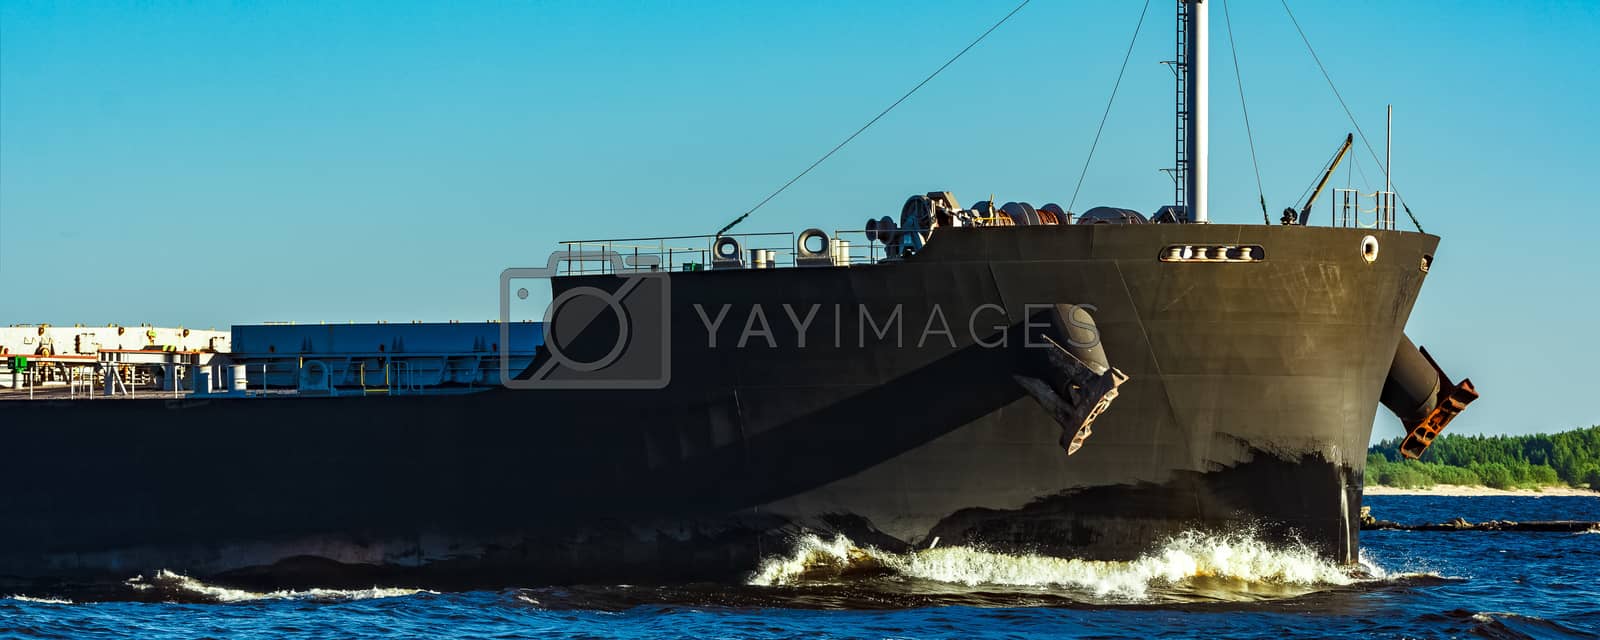 Royalty free image of Black bulk carrier by sengnsp